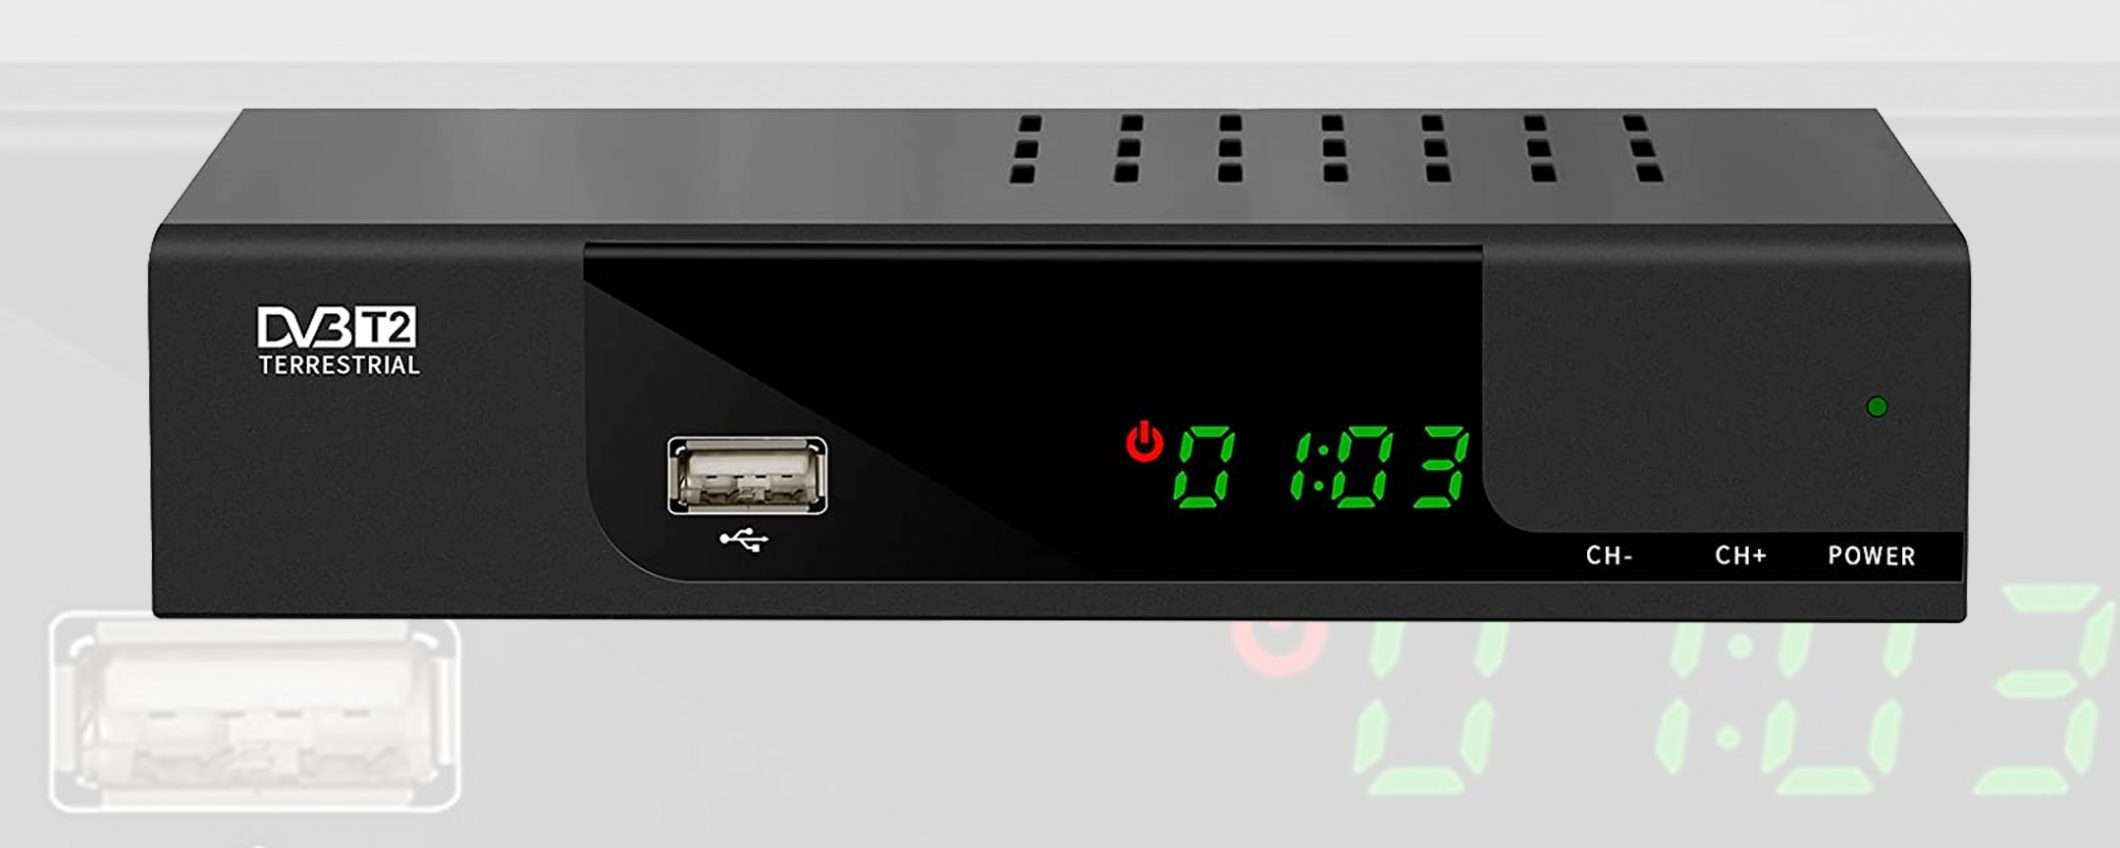 Decoder DVB-T2 (registratore e player): ottimo prezzo